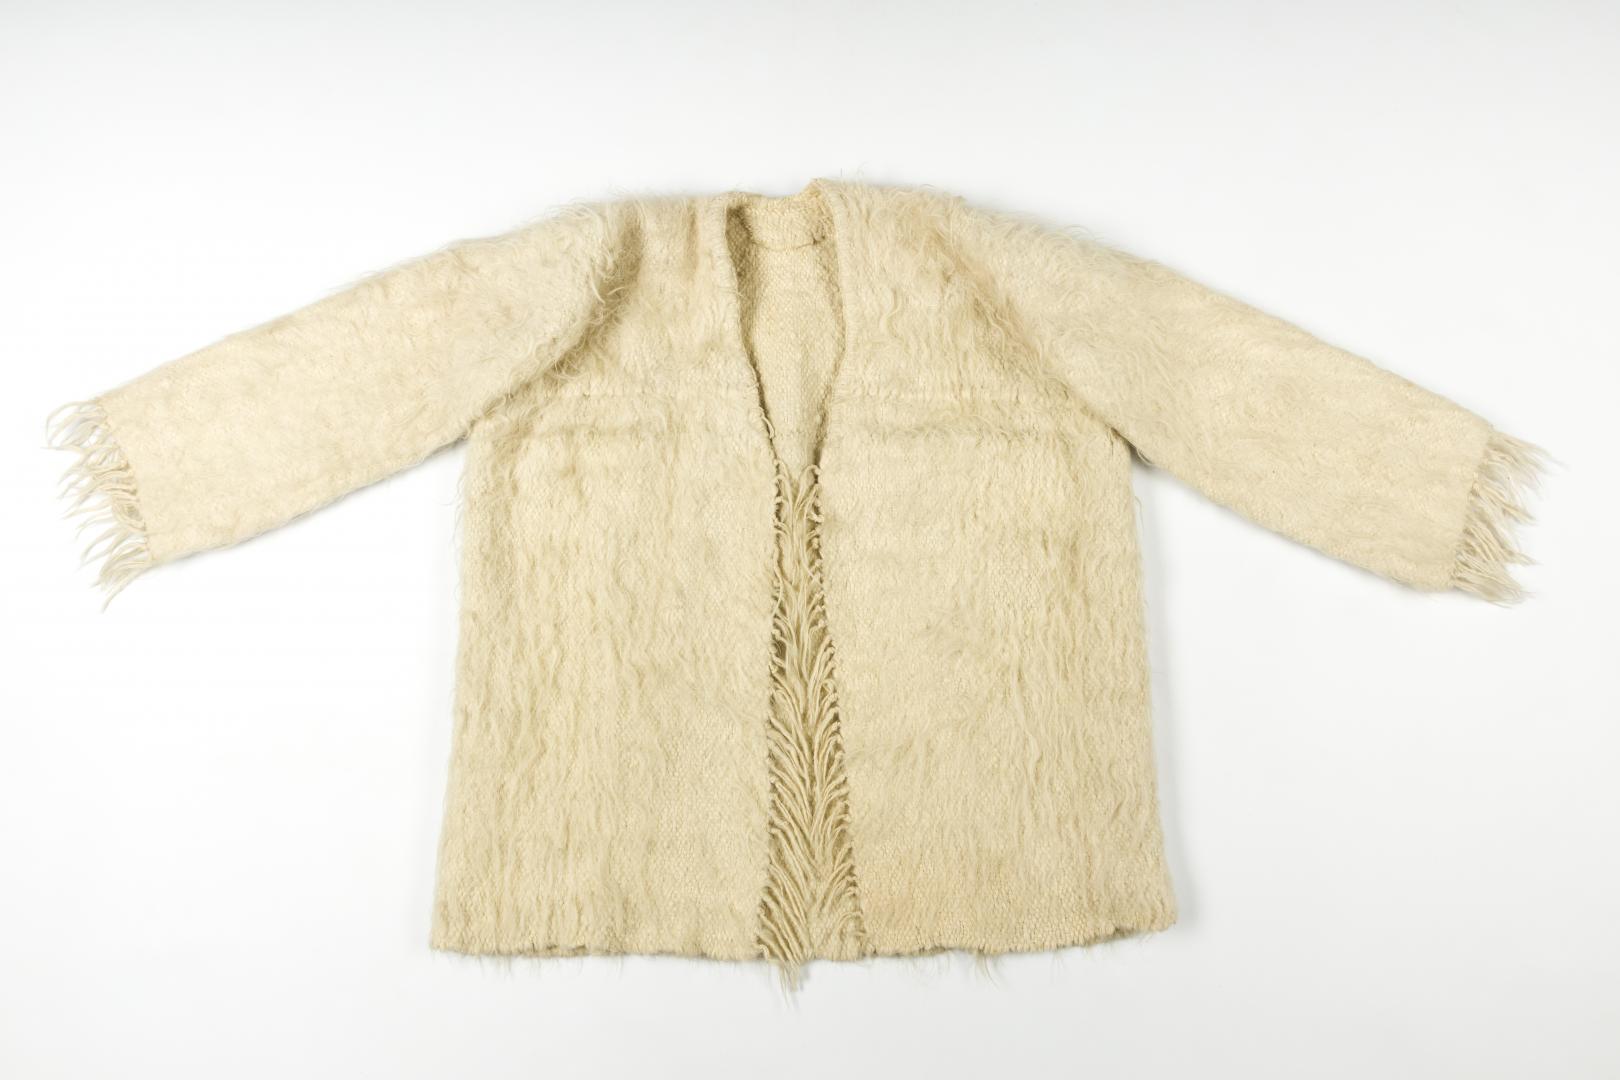 Hunia (wool overcoat) with pile